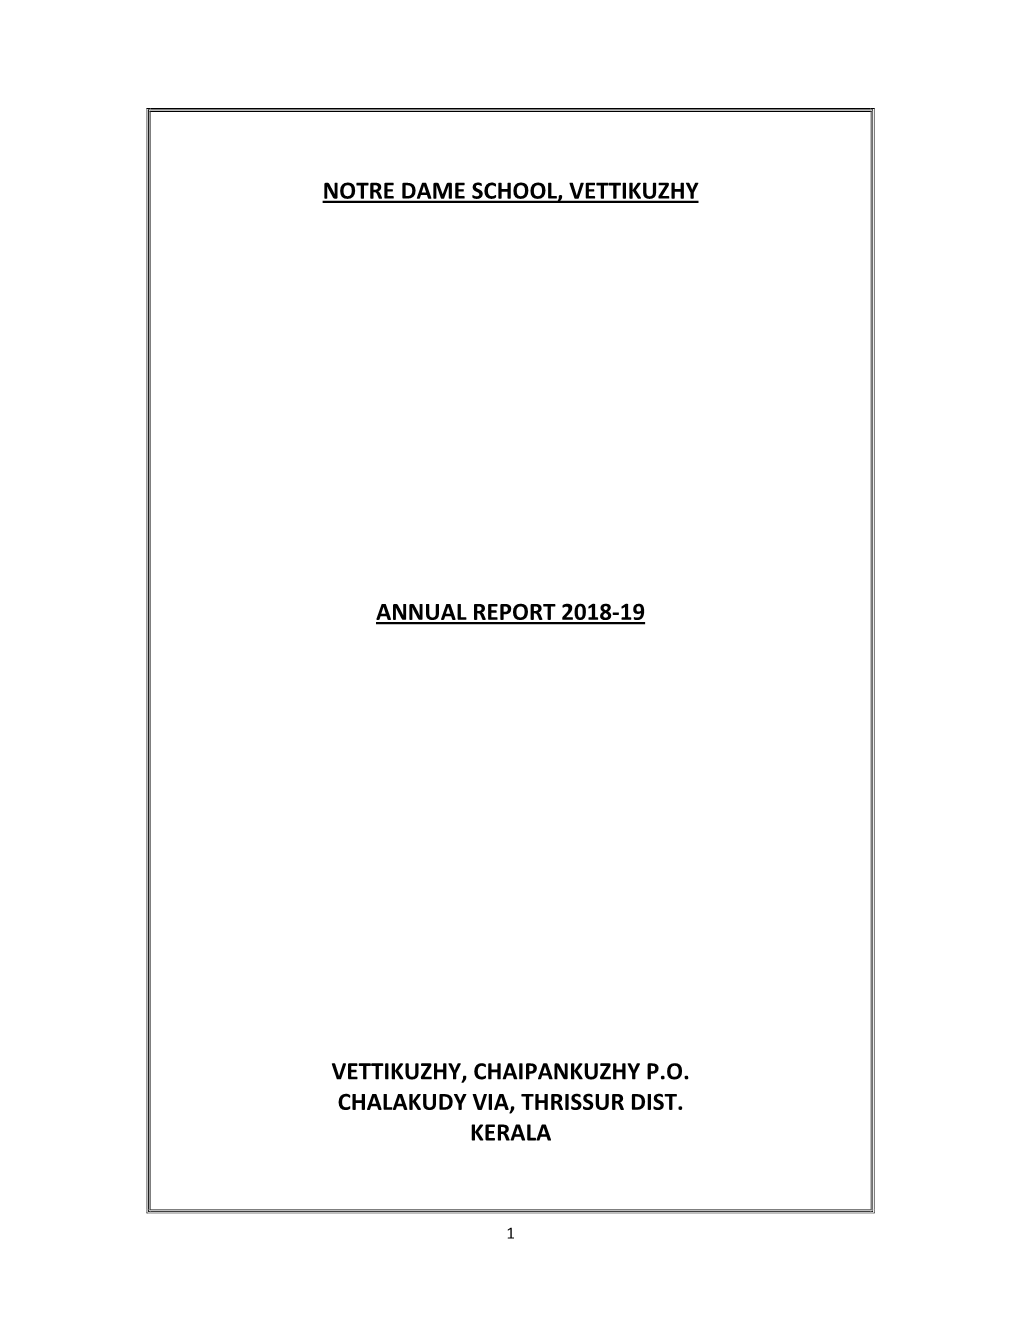 Notre Dame School, Vettikuzhy Annual Report 2018-19 Vettikuzhy, Chaipankuzhy P.O. Chalakudy Via, Thrissur Dist. Kerala